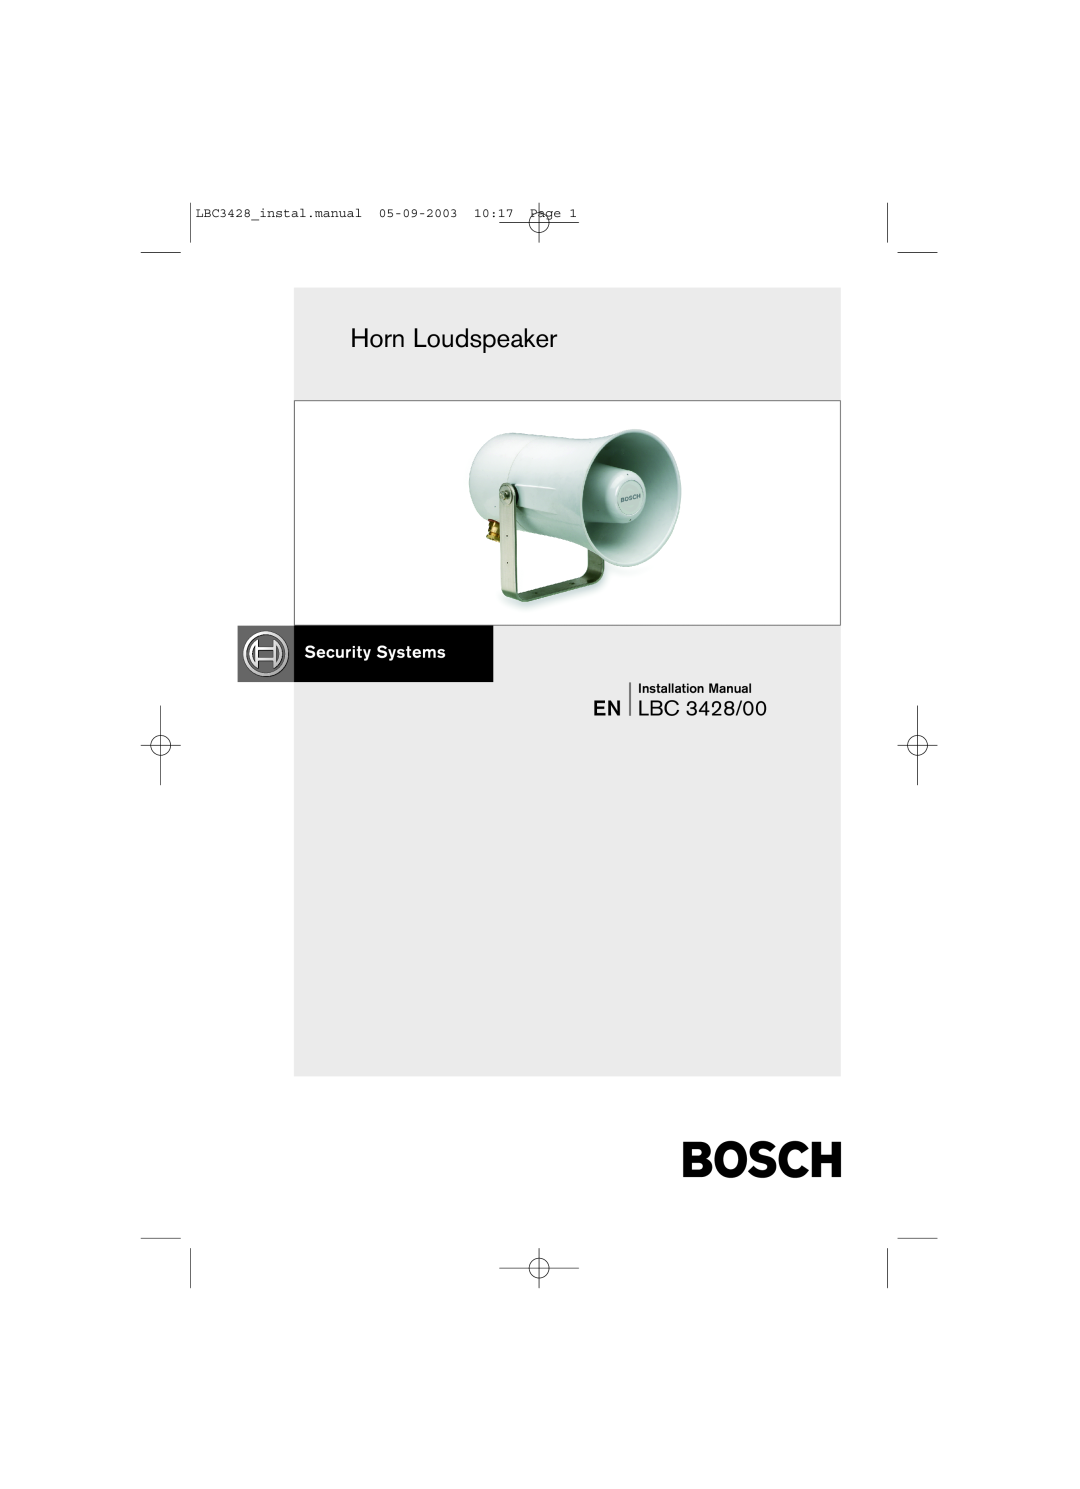 Bosch Appliances installation manual Horn Loudspeaker, EN LBC 3428/00, LBC3428 instal.manual 05-09-200310 17 Page 